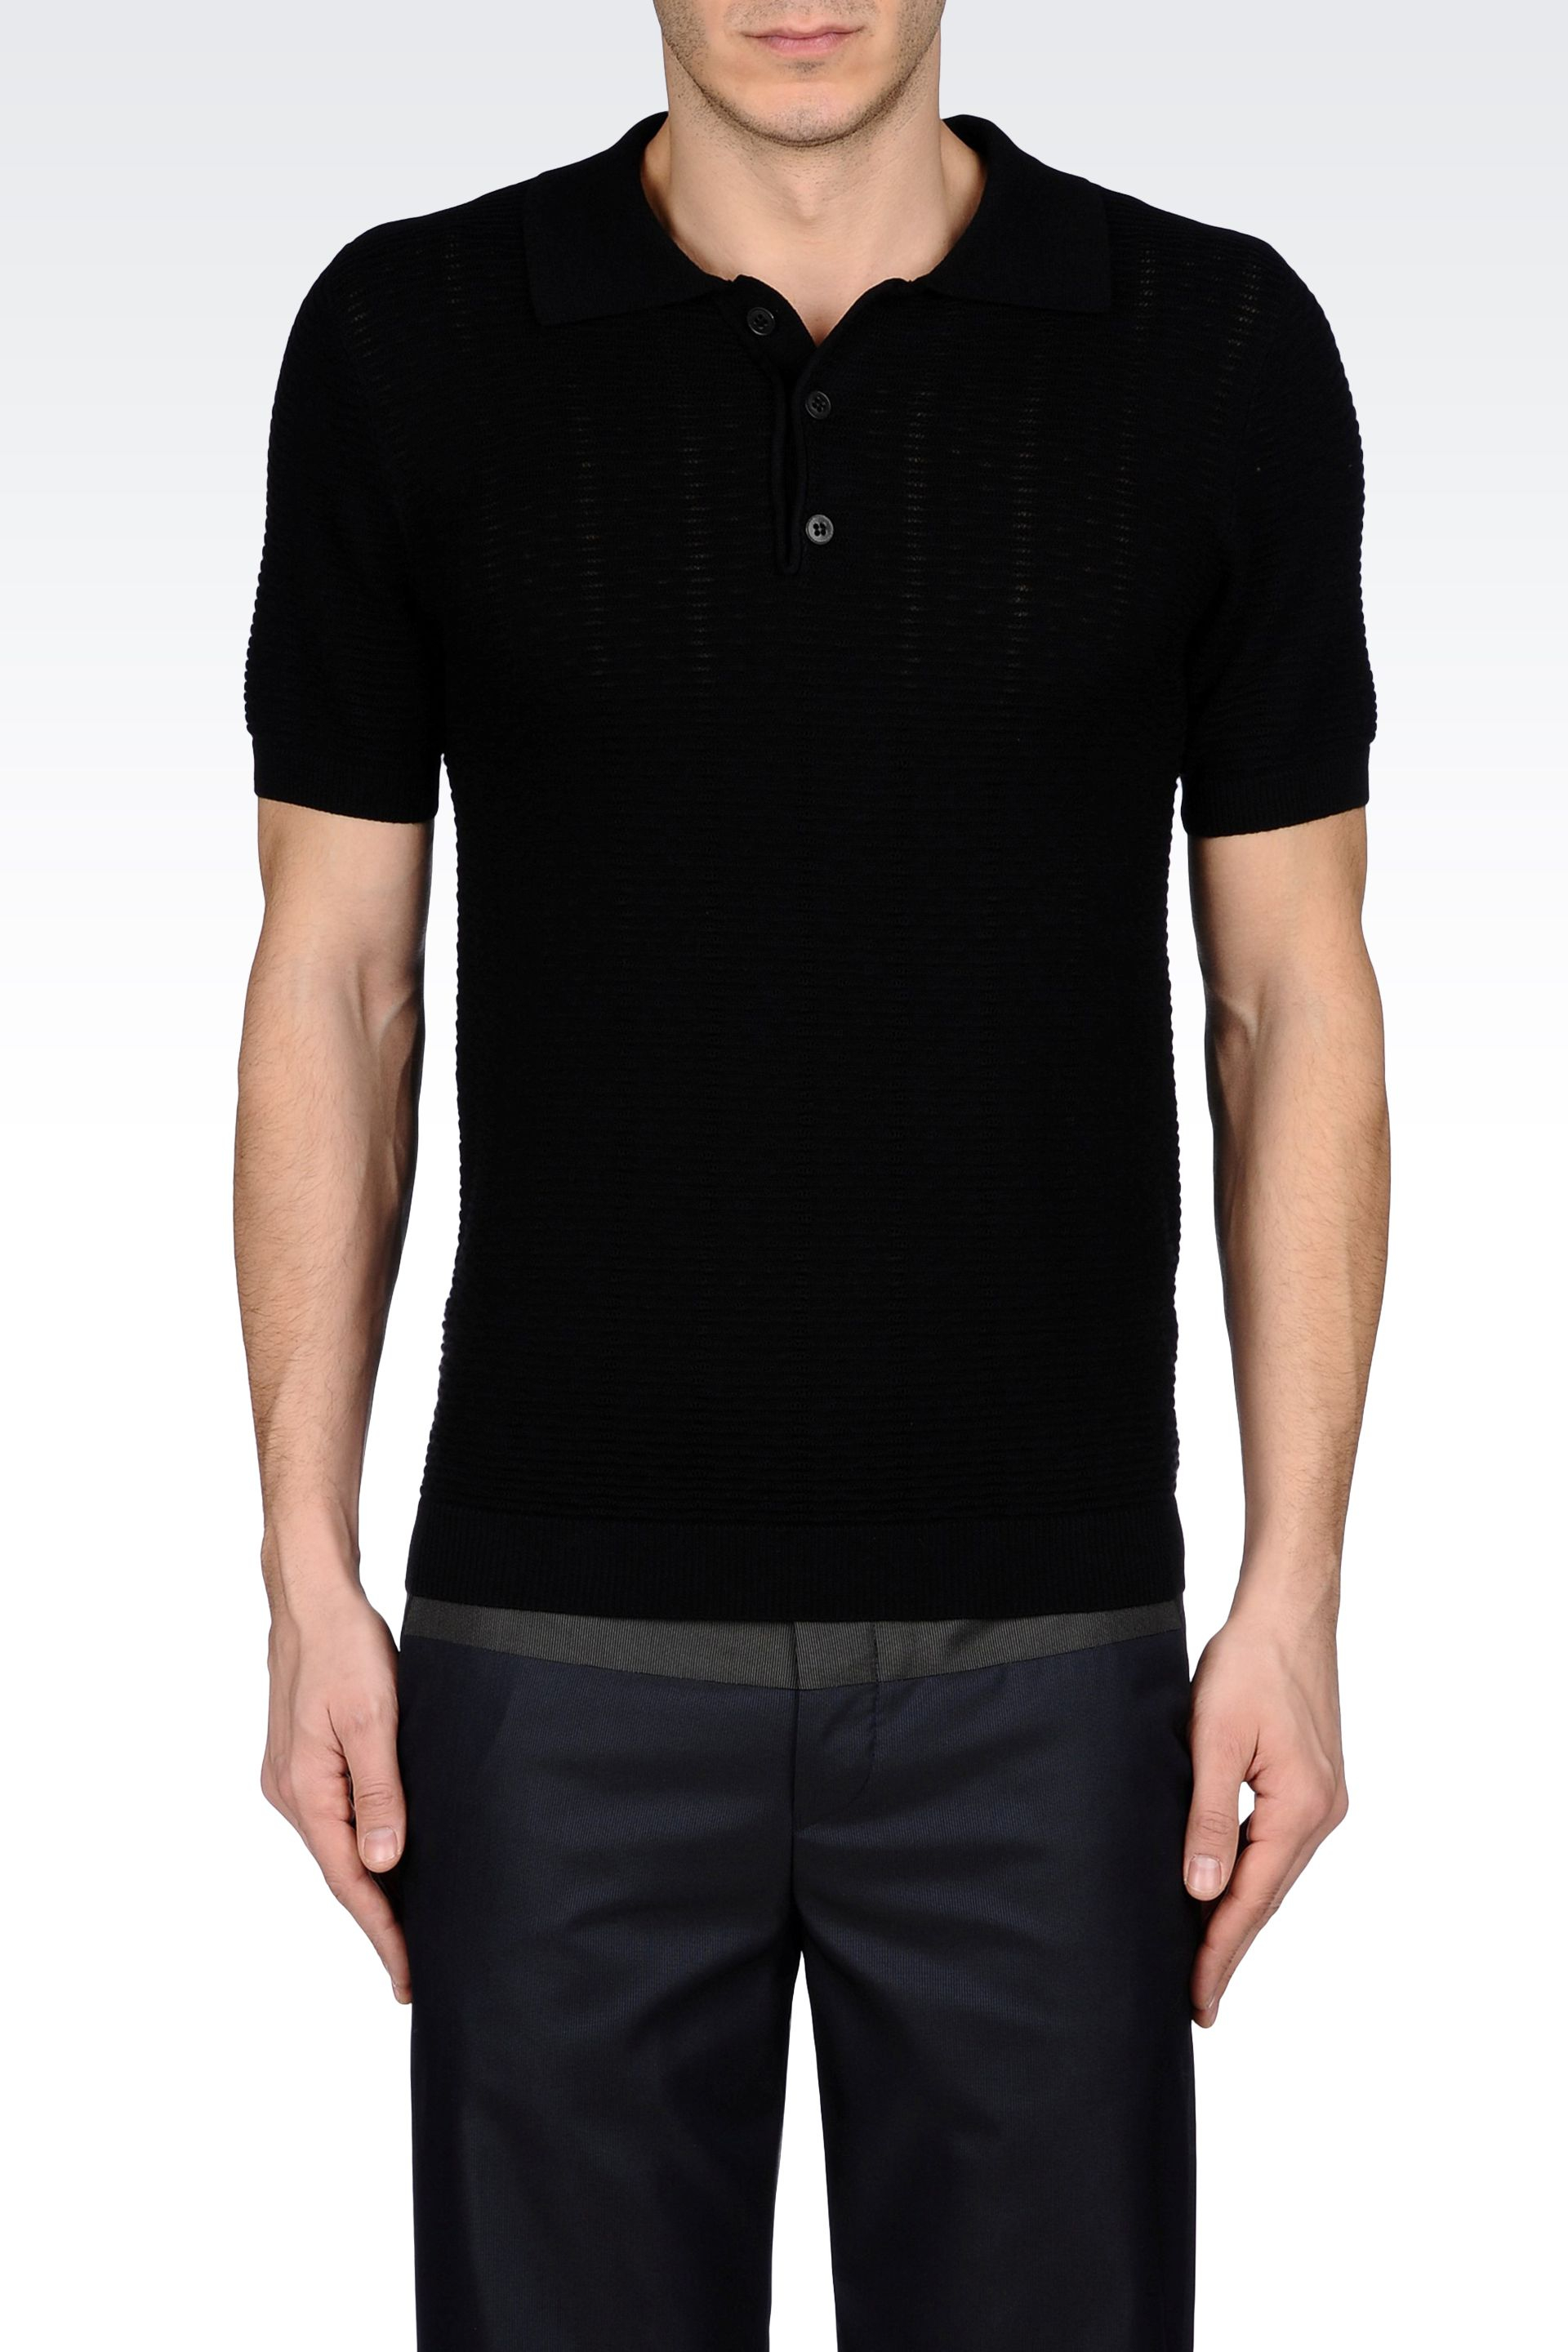 Lyst - Emporio Armani Classic Knit Polo Shirt in Black for Men